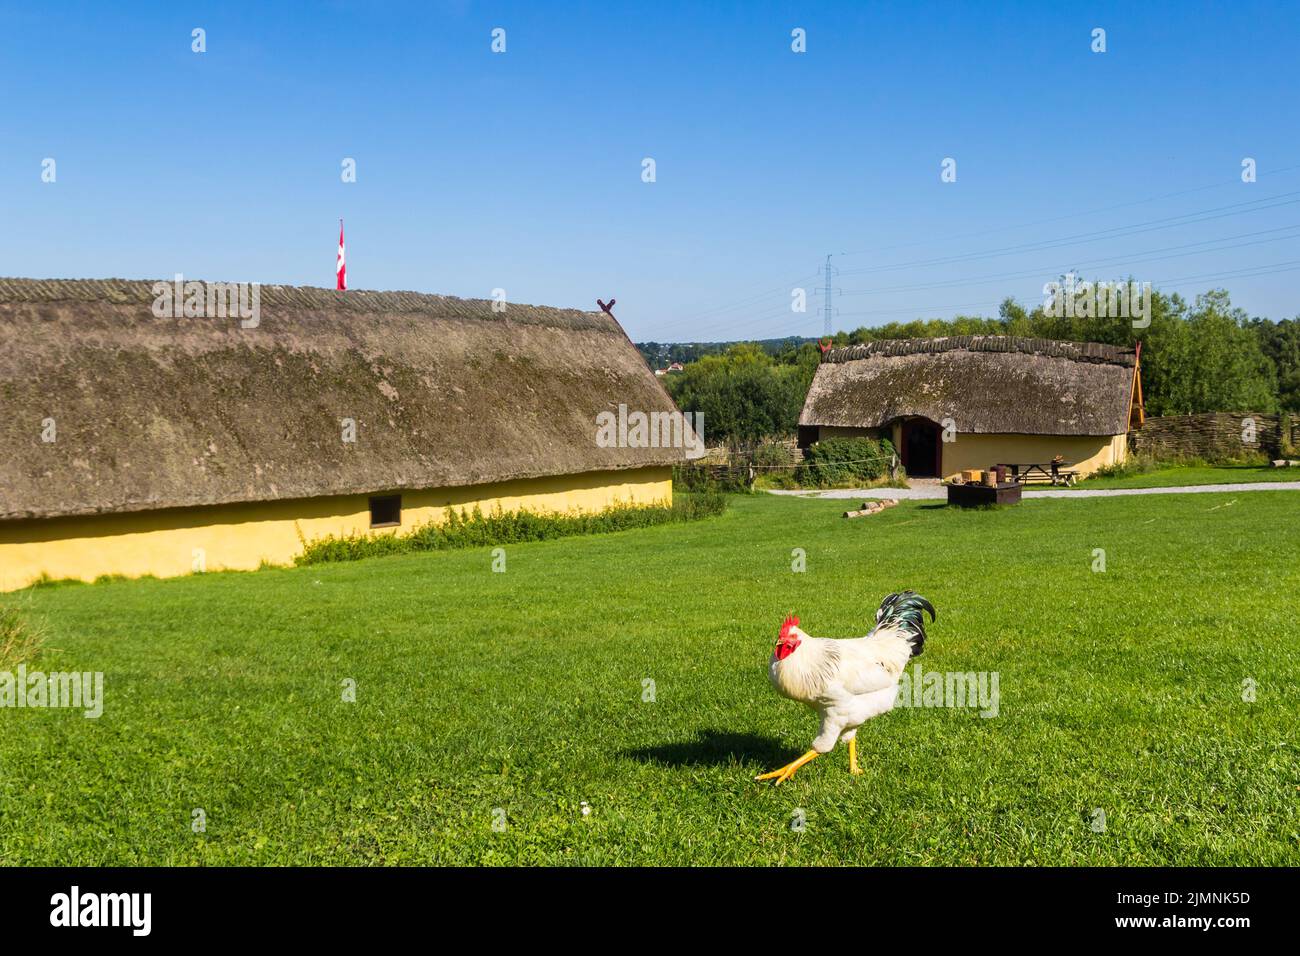 Chicken in the grass of the Viking villgae Fyrkat near Hobro, Denmark Stock Photo